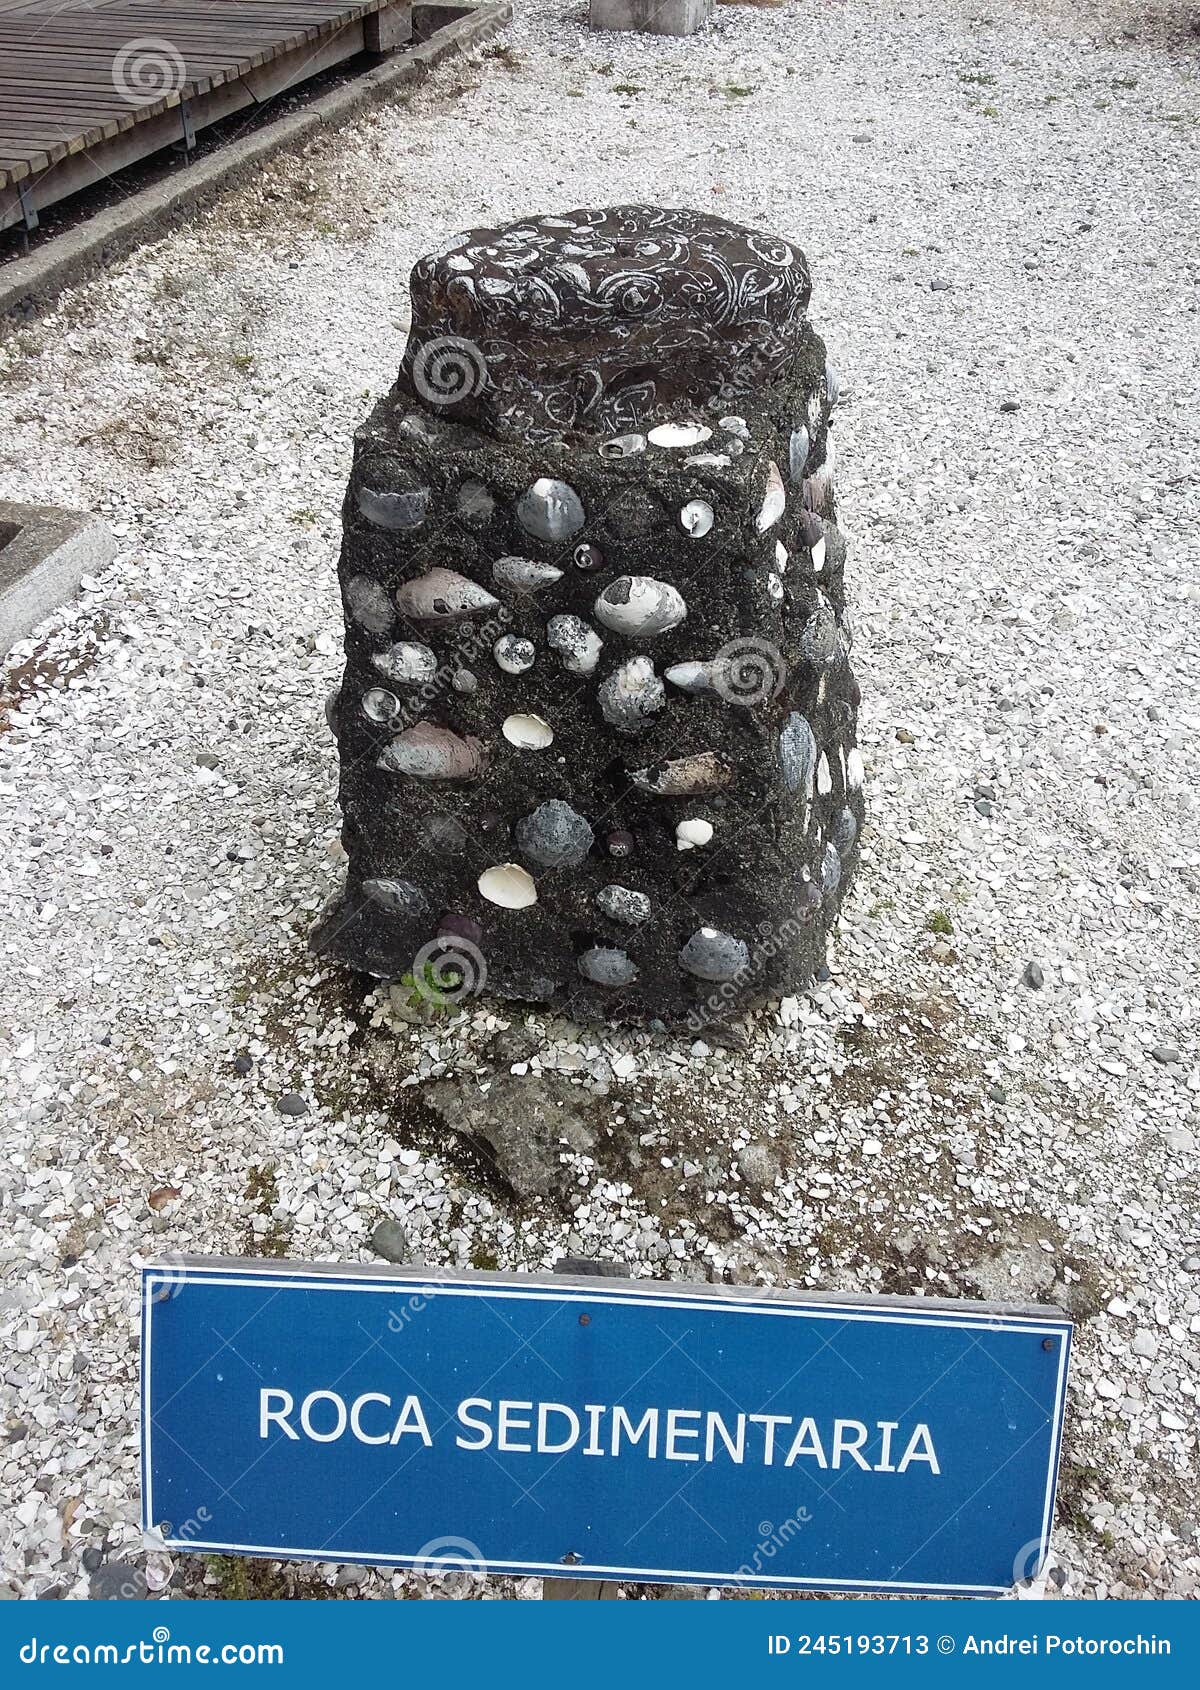 sample sedimentary rock (roca sedimentaria) in the open-air museum, chiloe island patagonia. chile